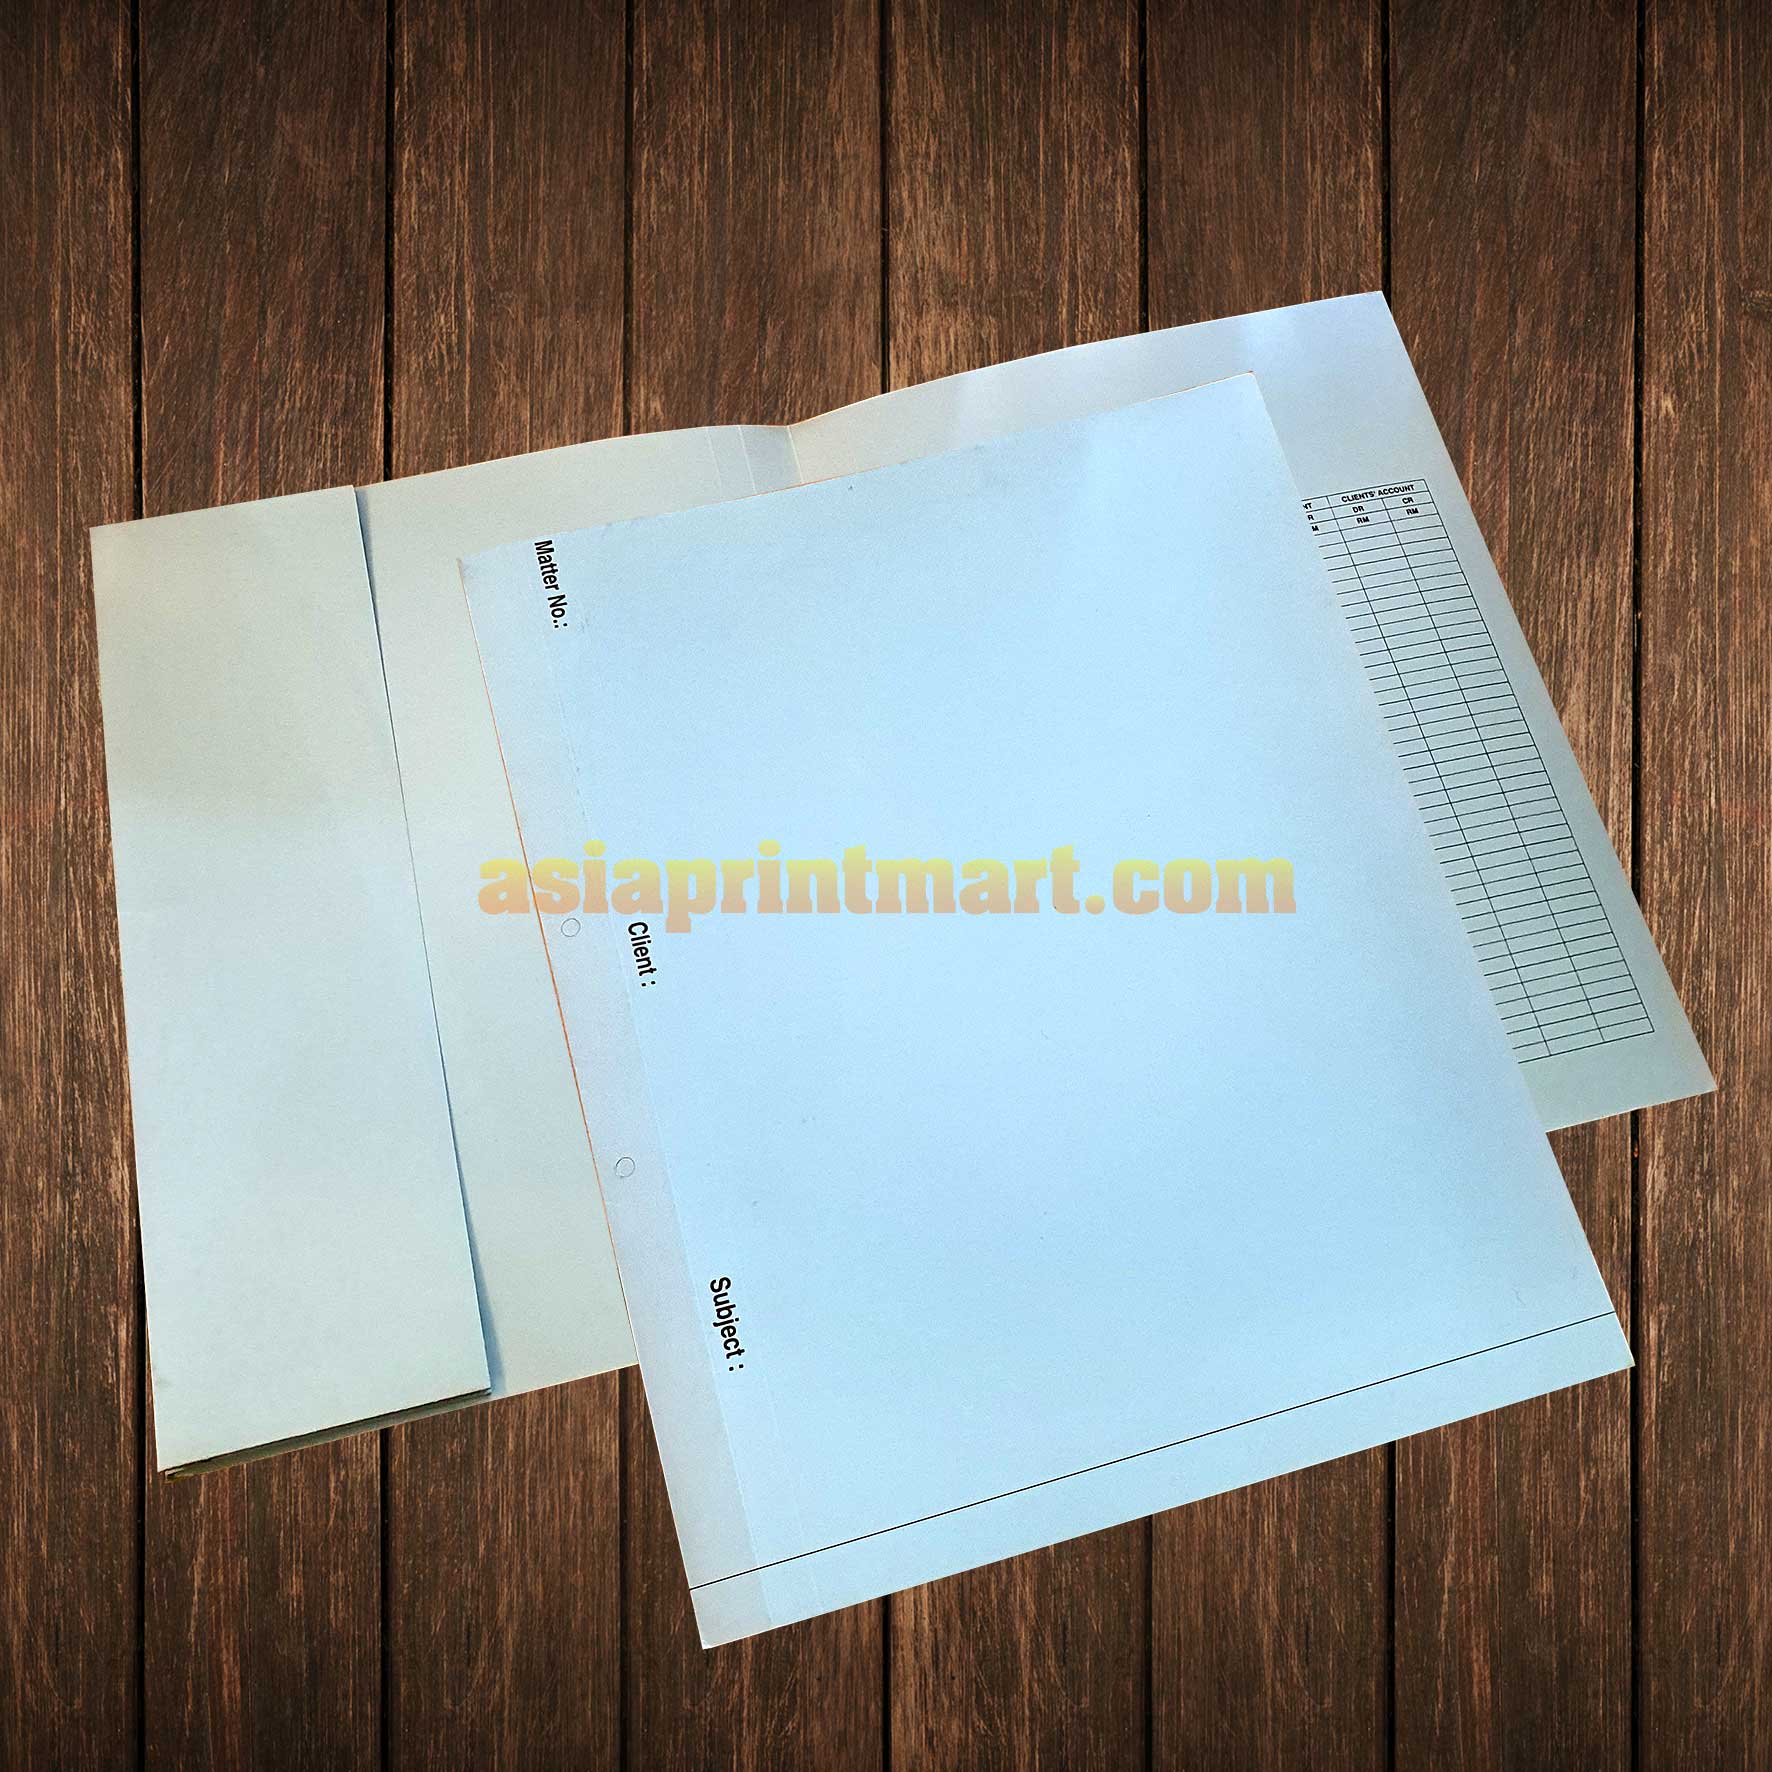 cheap corporate folders printing | business file printing | business folders printing service | malaysia printing | cetak fail murah